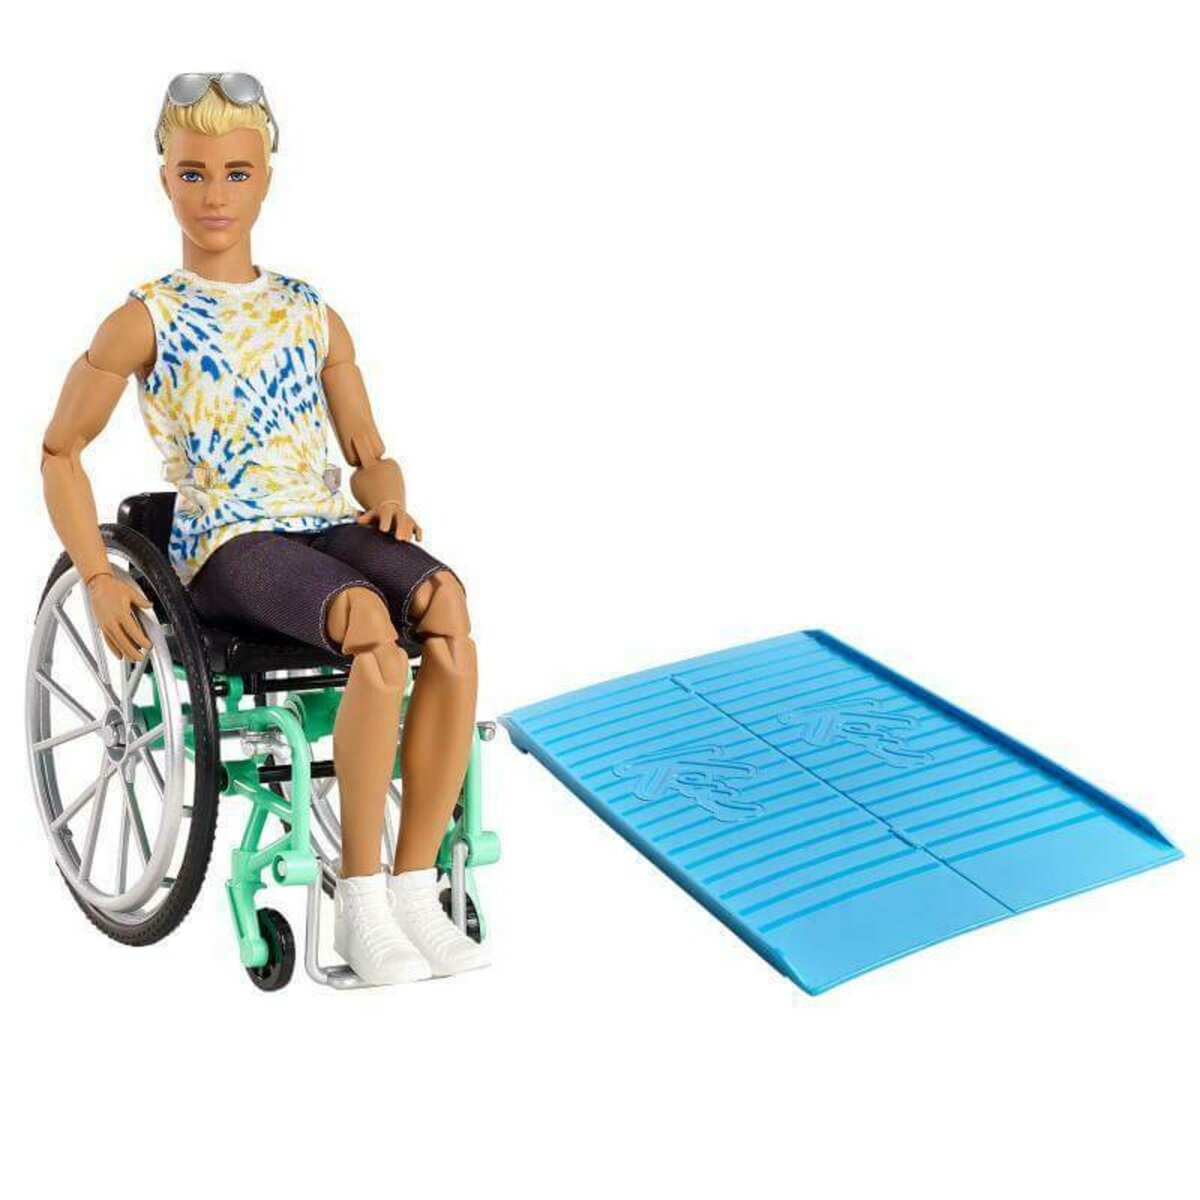 Barbie chaise roulante